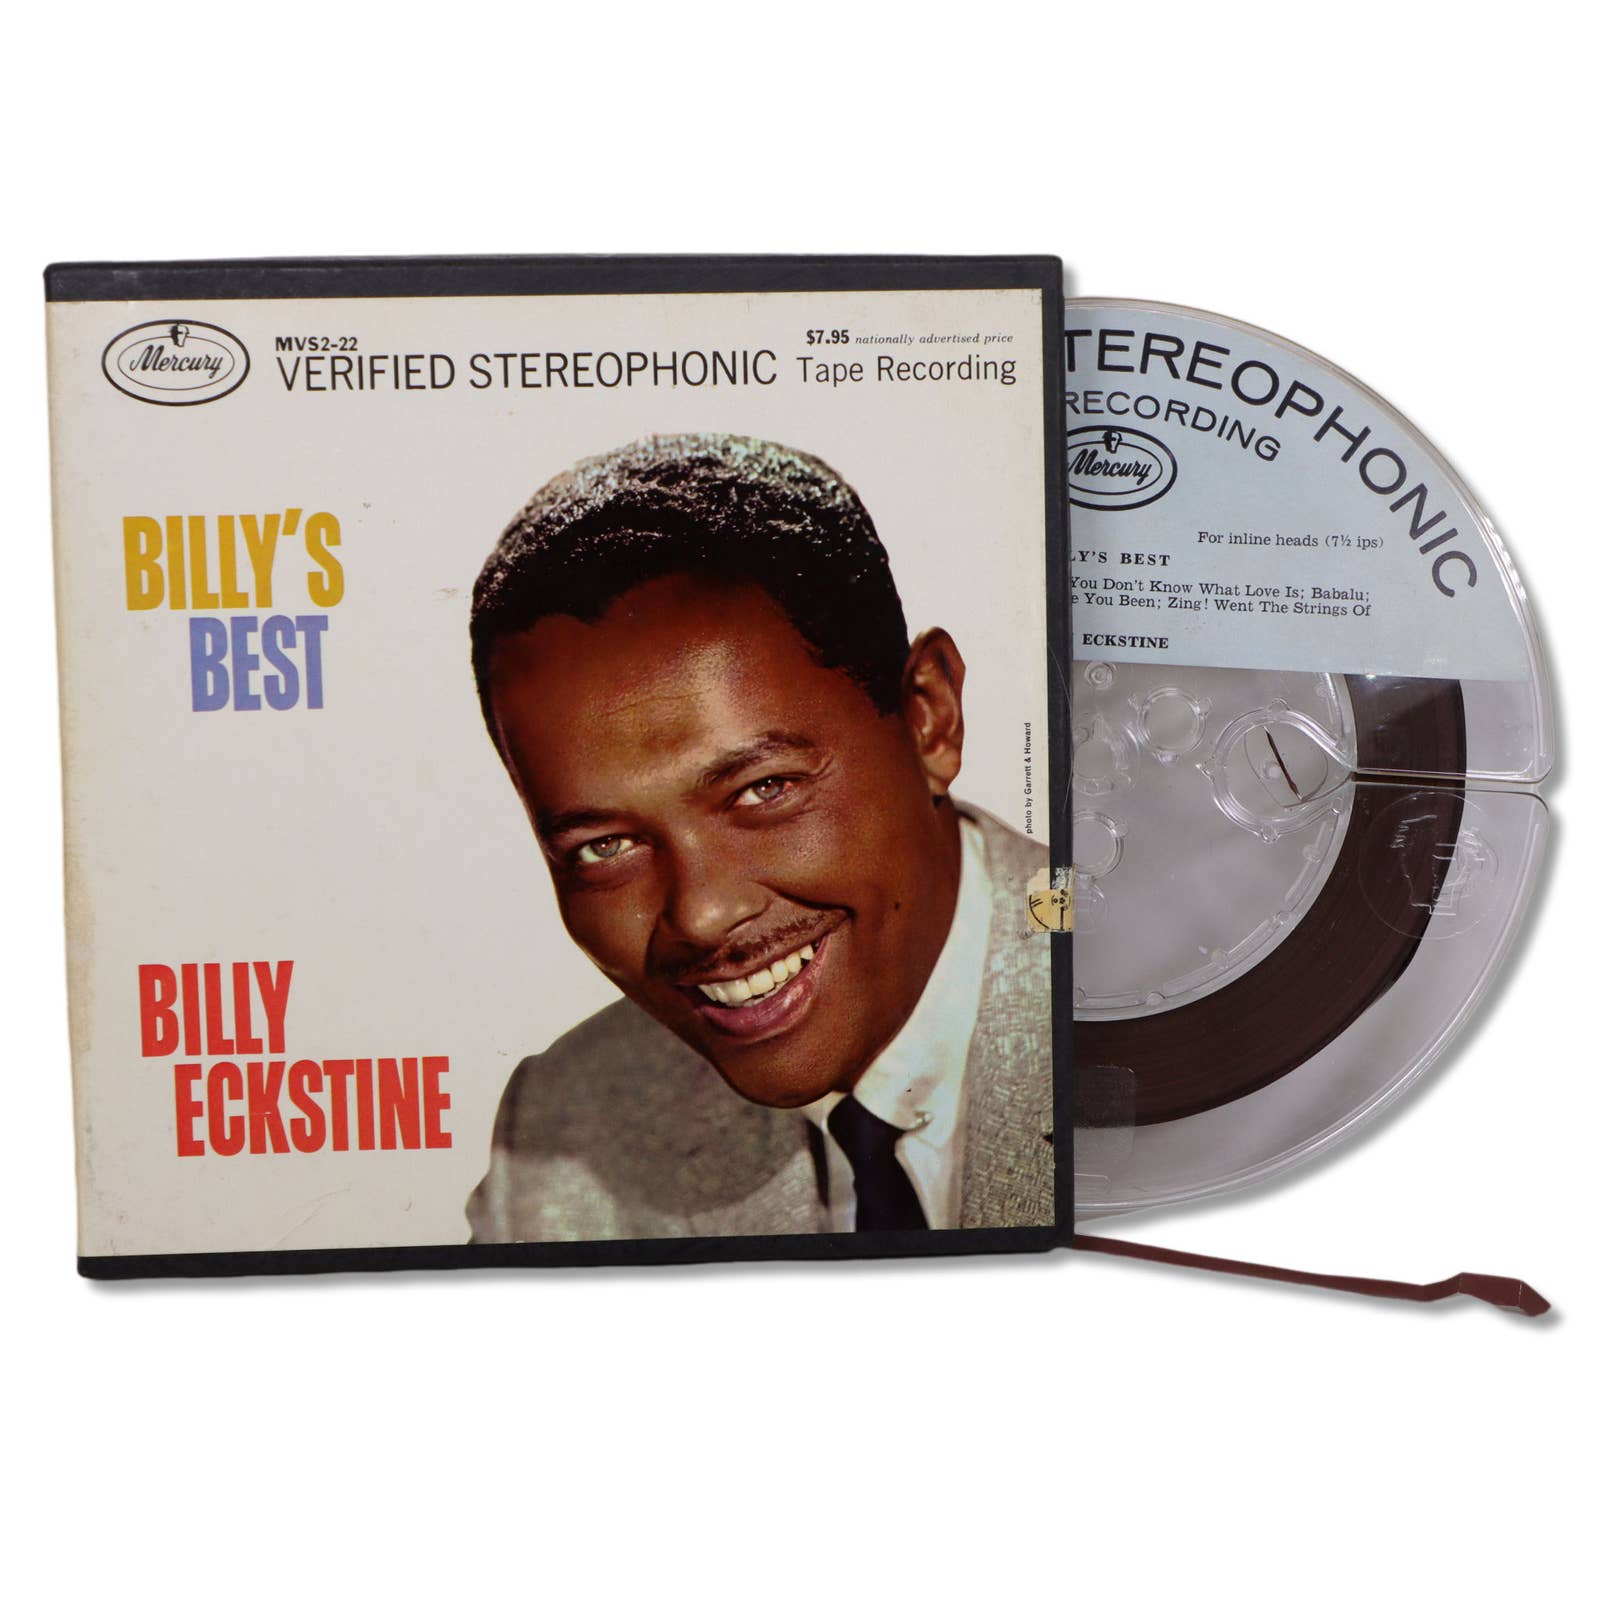 1958 Billy's Best Billy Eckstine Reel to Reel Tape 7 1/2 IPS